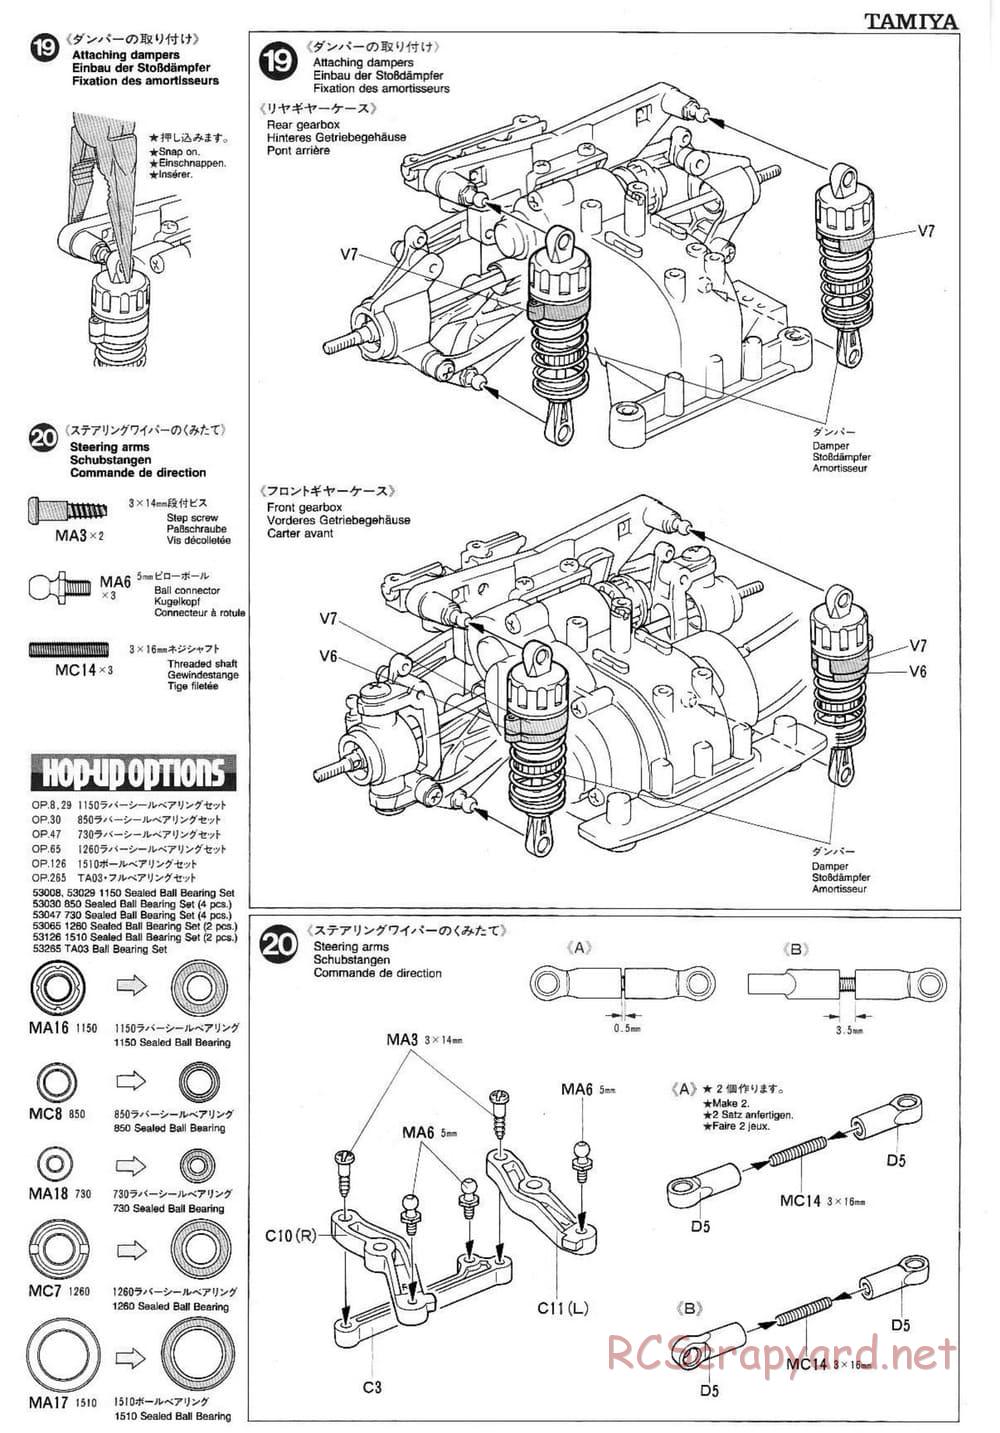 Tamiya - Mitsubishi Lancer Evolution V WRC - TA-03F Chassis - Manual - Page 11